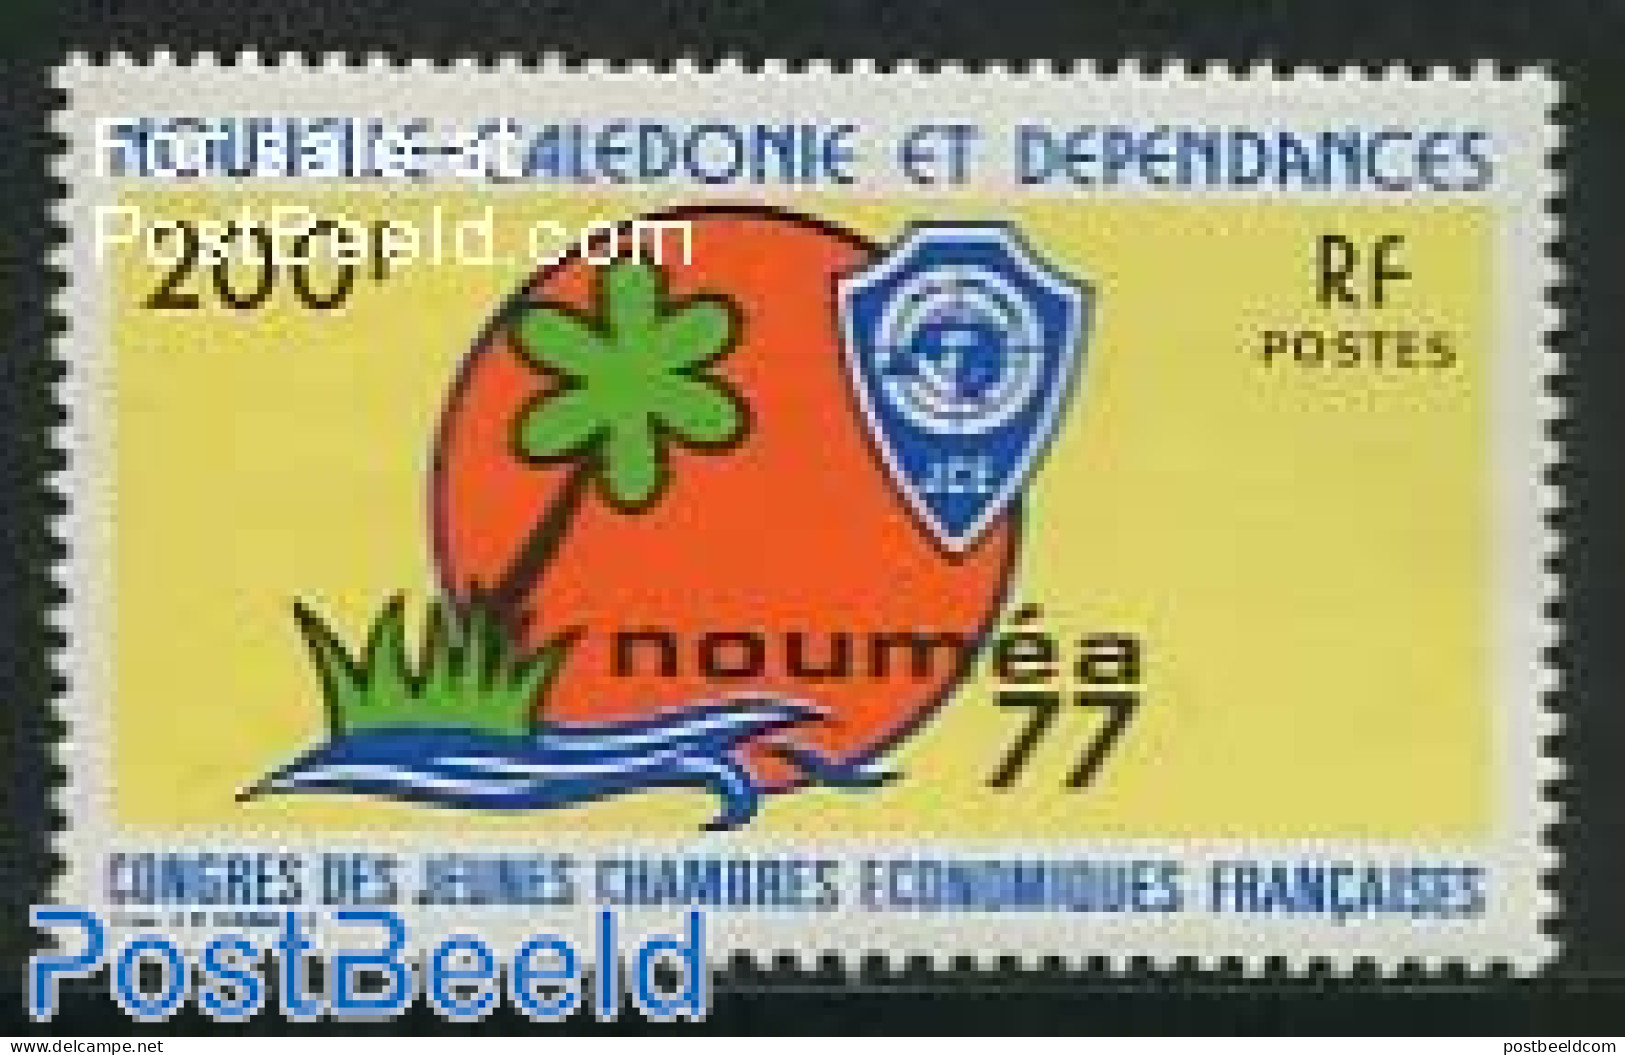 New Caledonia 1977 Junior Chamber Of Commerce 1v, Mint NH, Various - Export & Trade - Ongebruikt